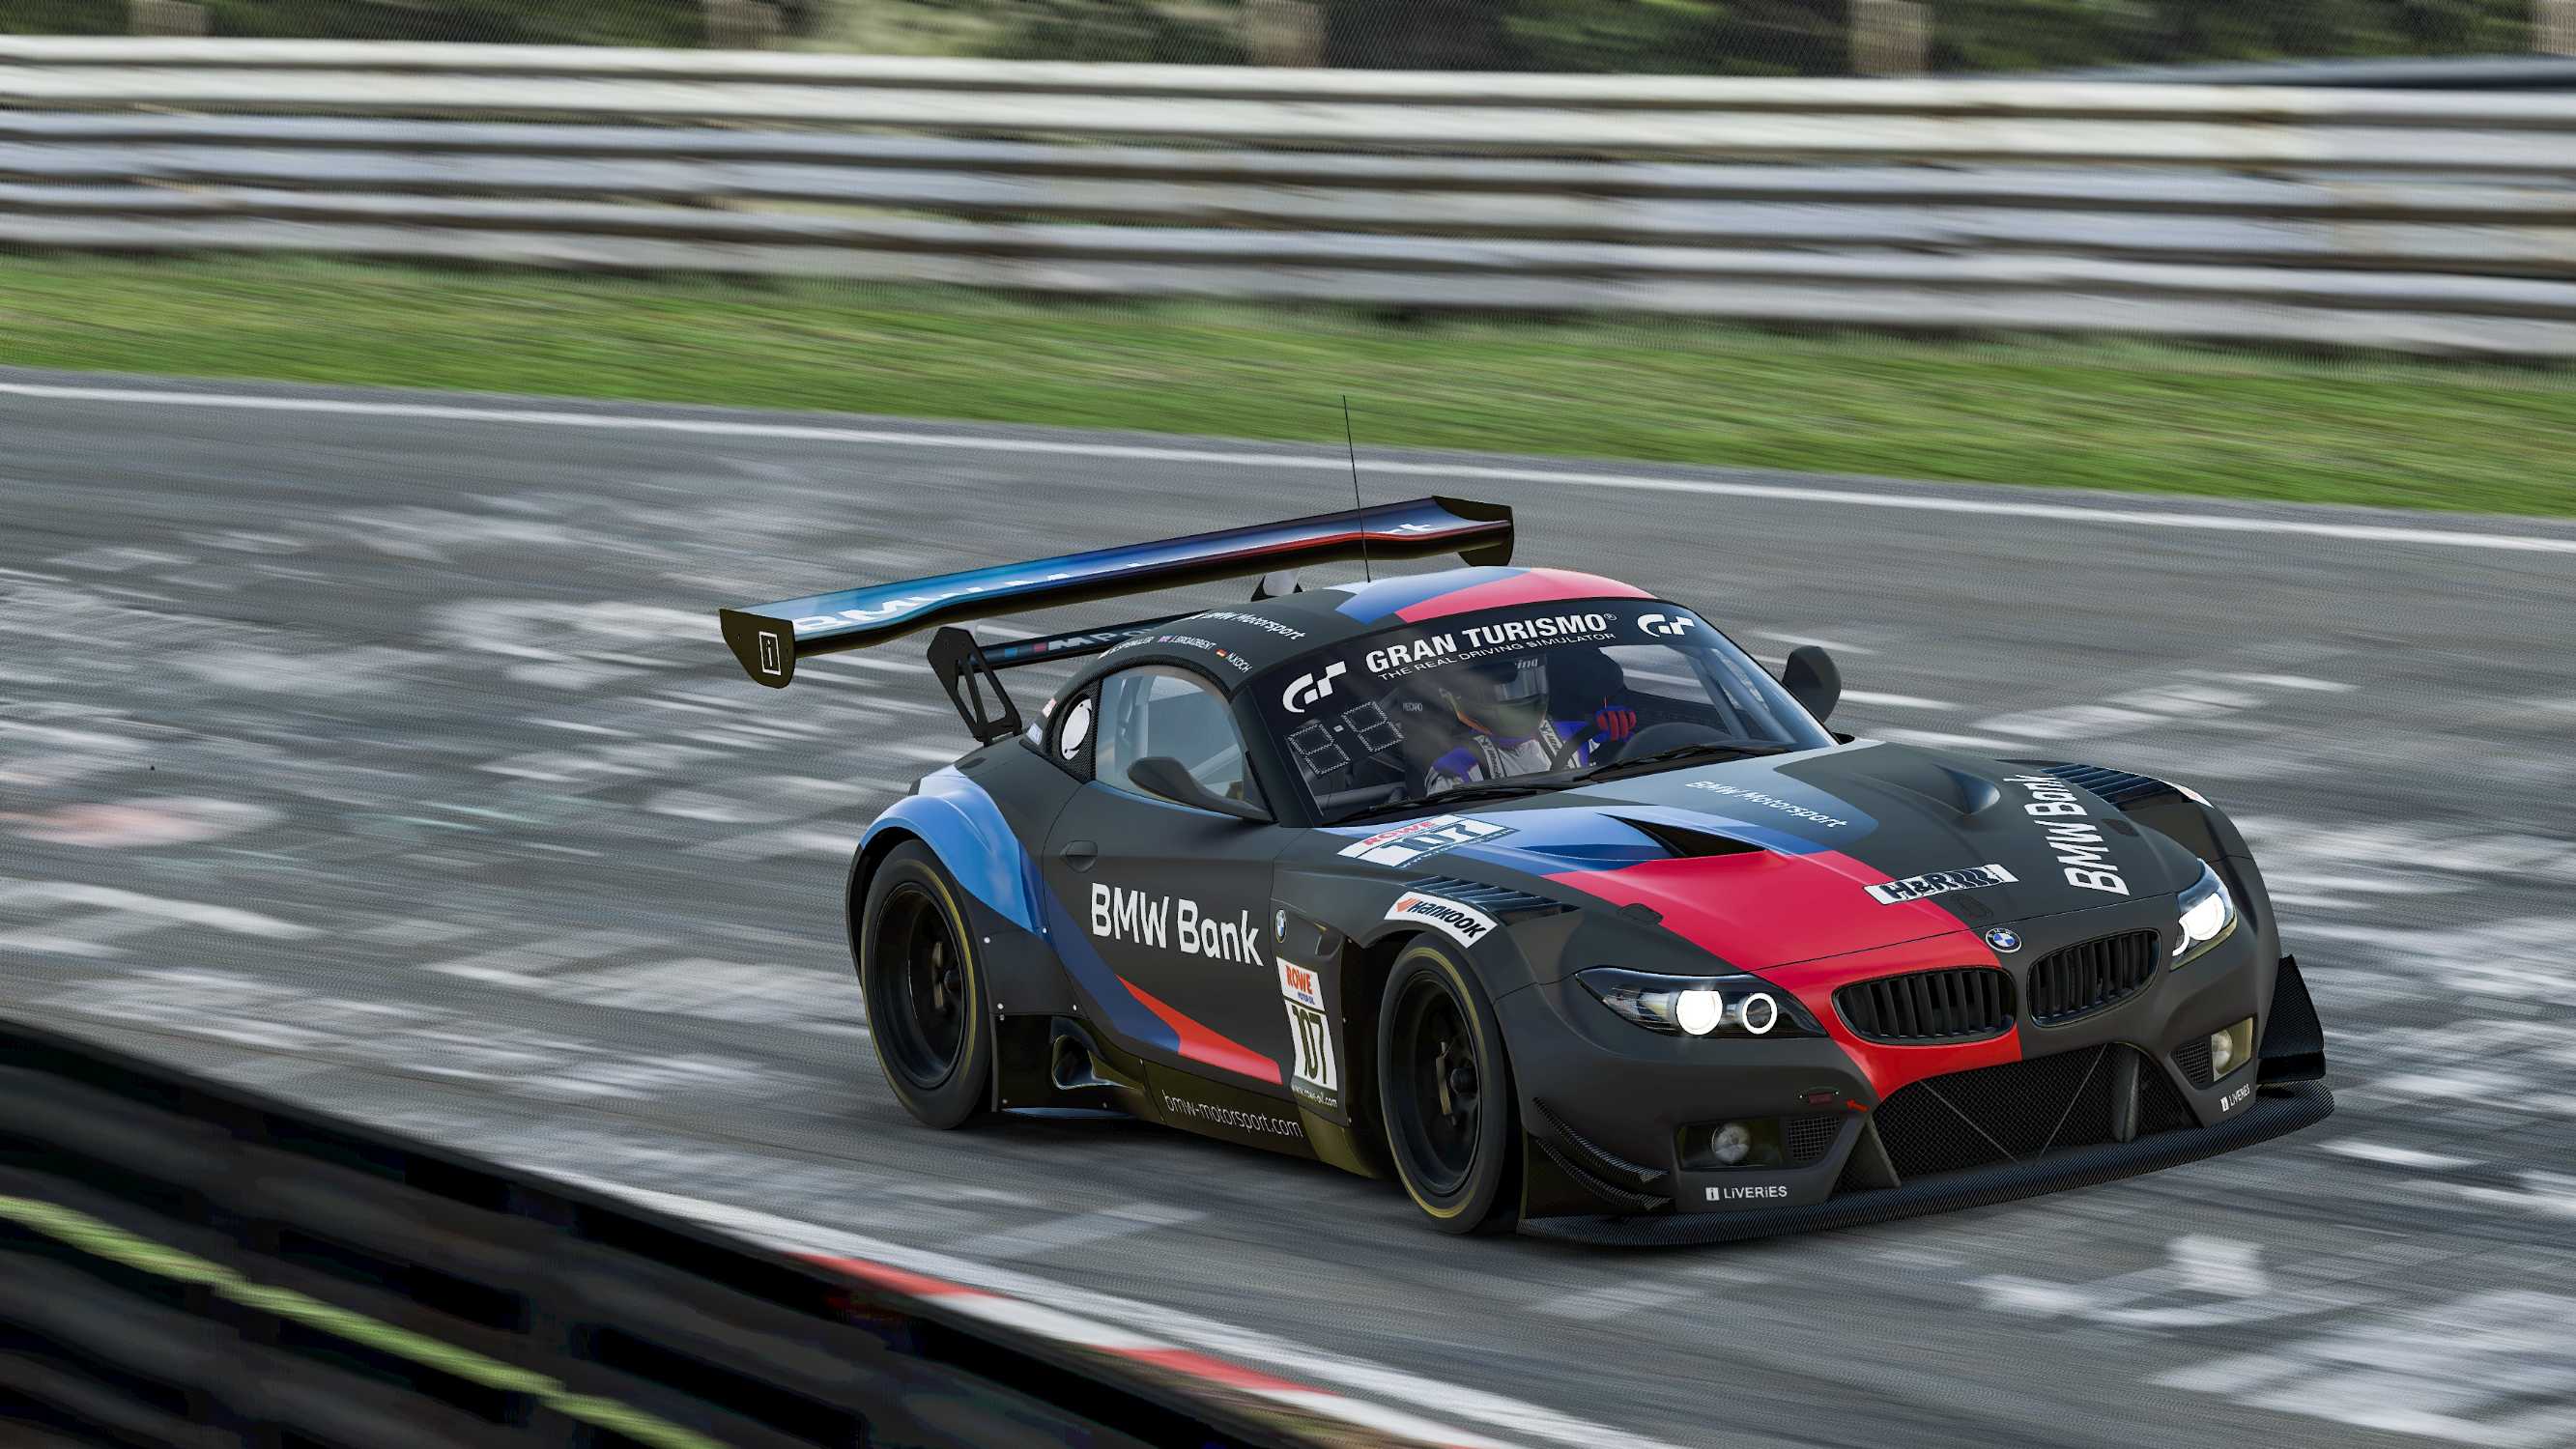 Large BMW Motorsport contingent in sim racing – Jens Marquardt: “A